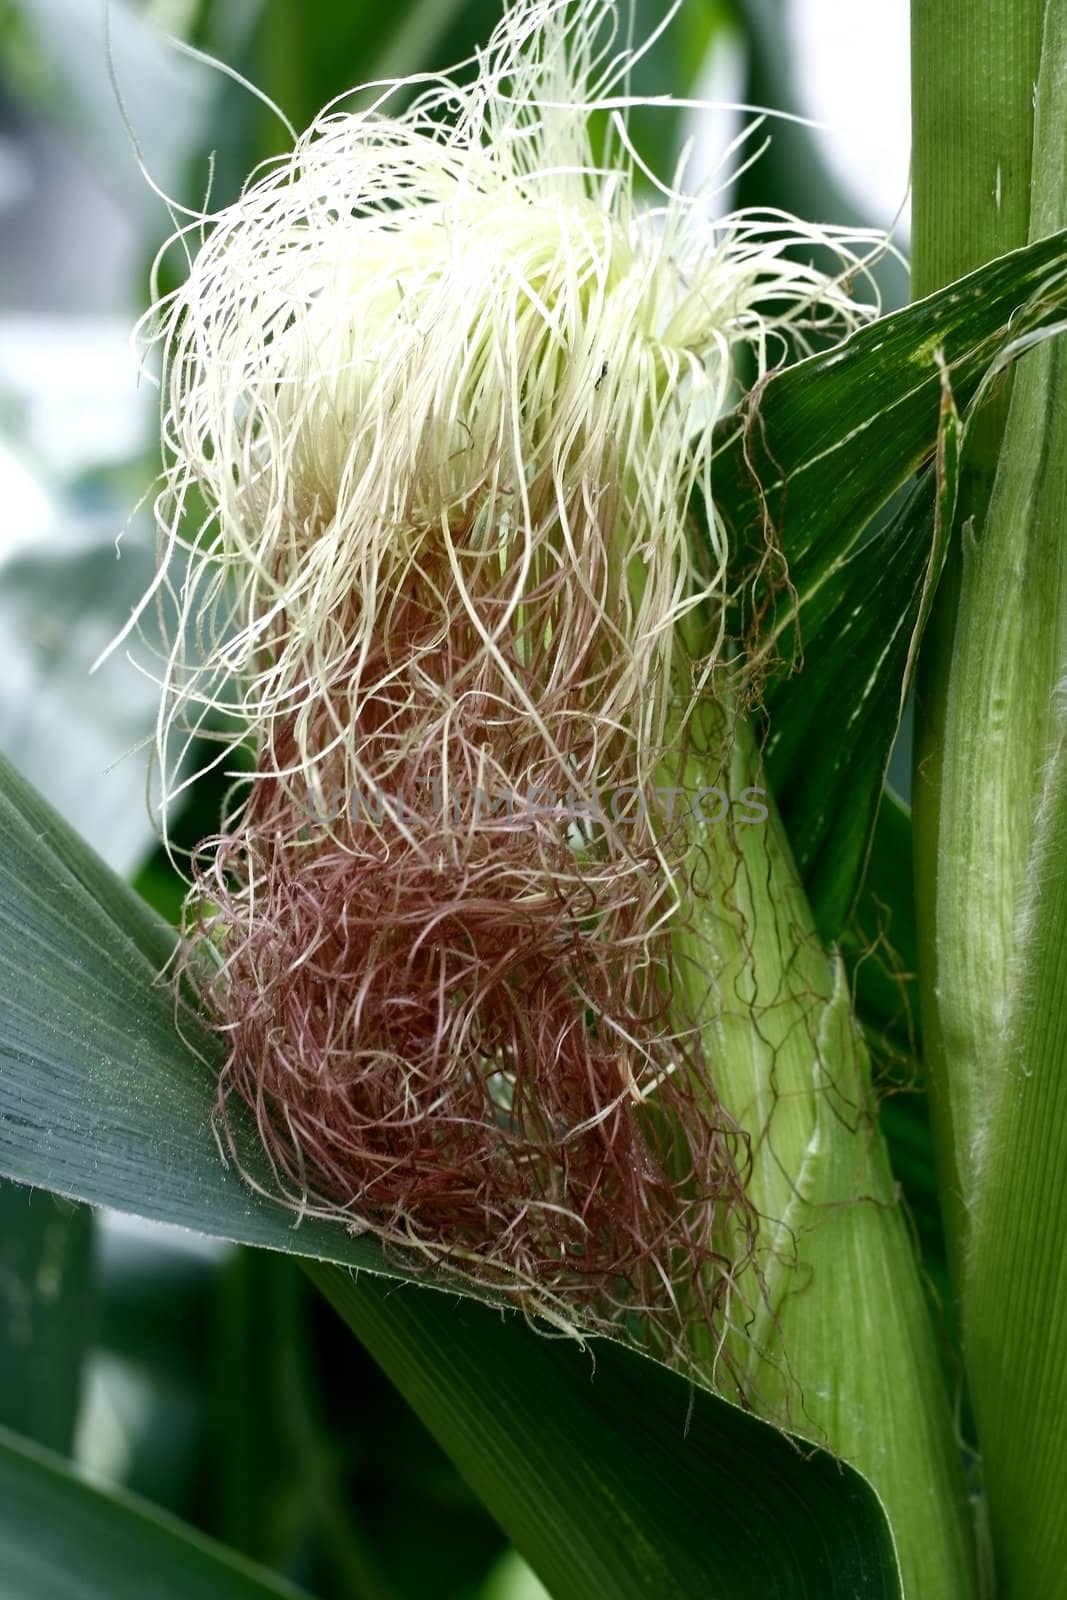 sweet corn cob growing on the plant